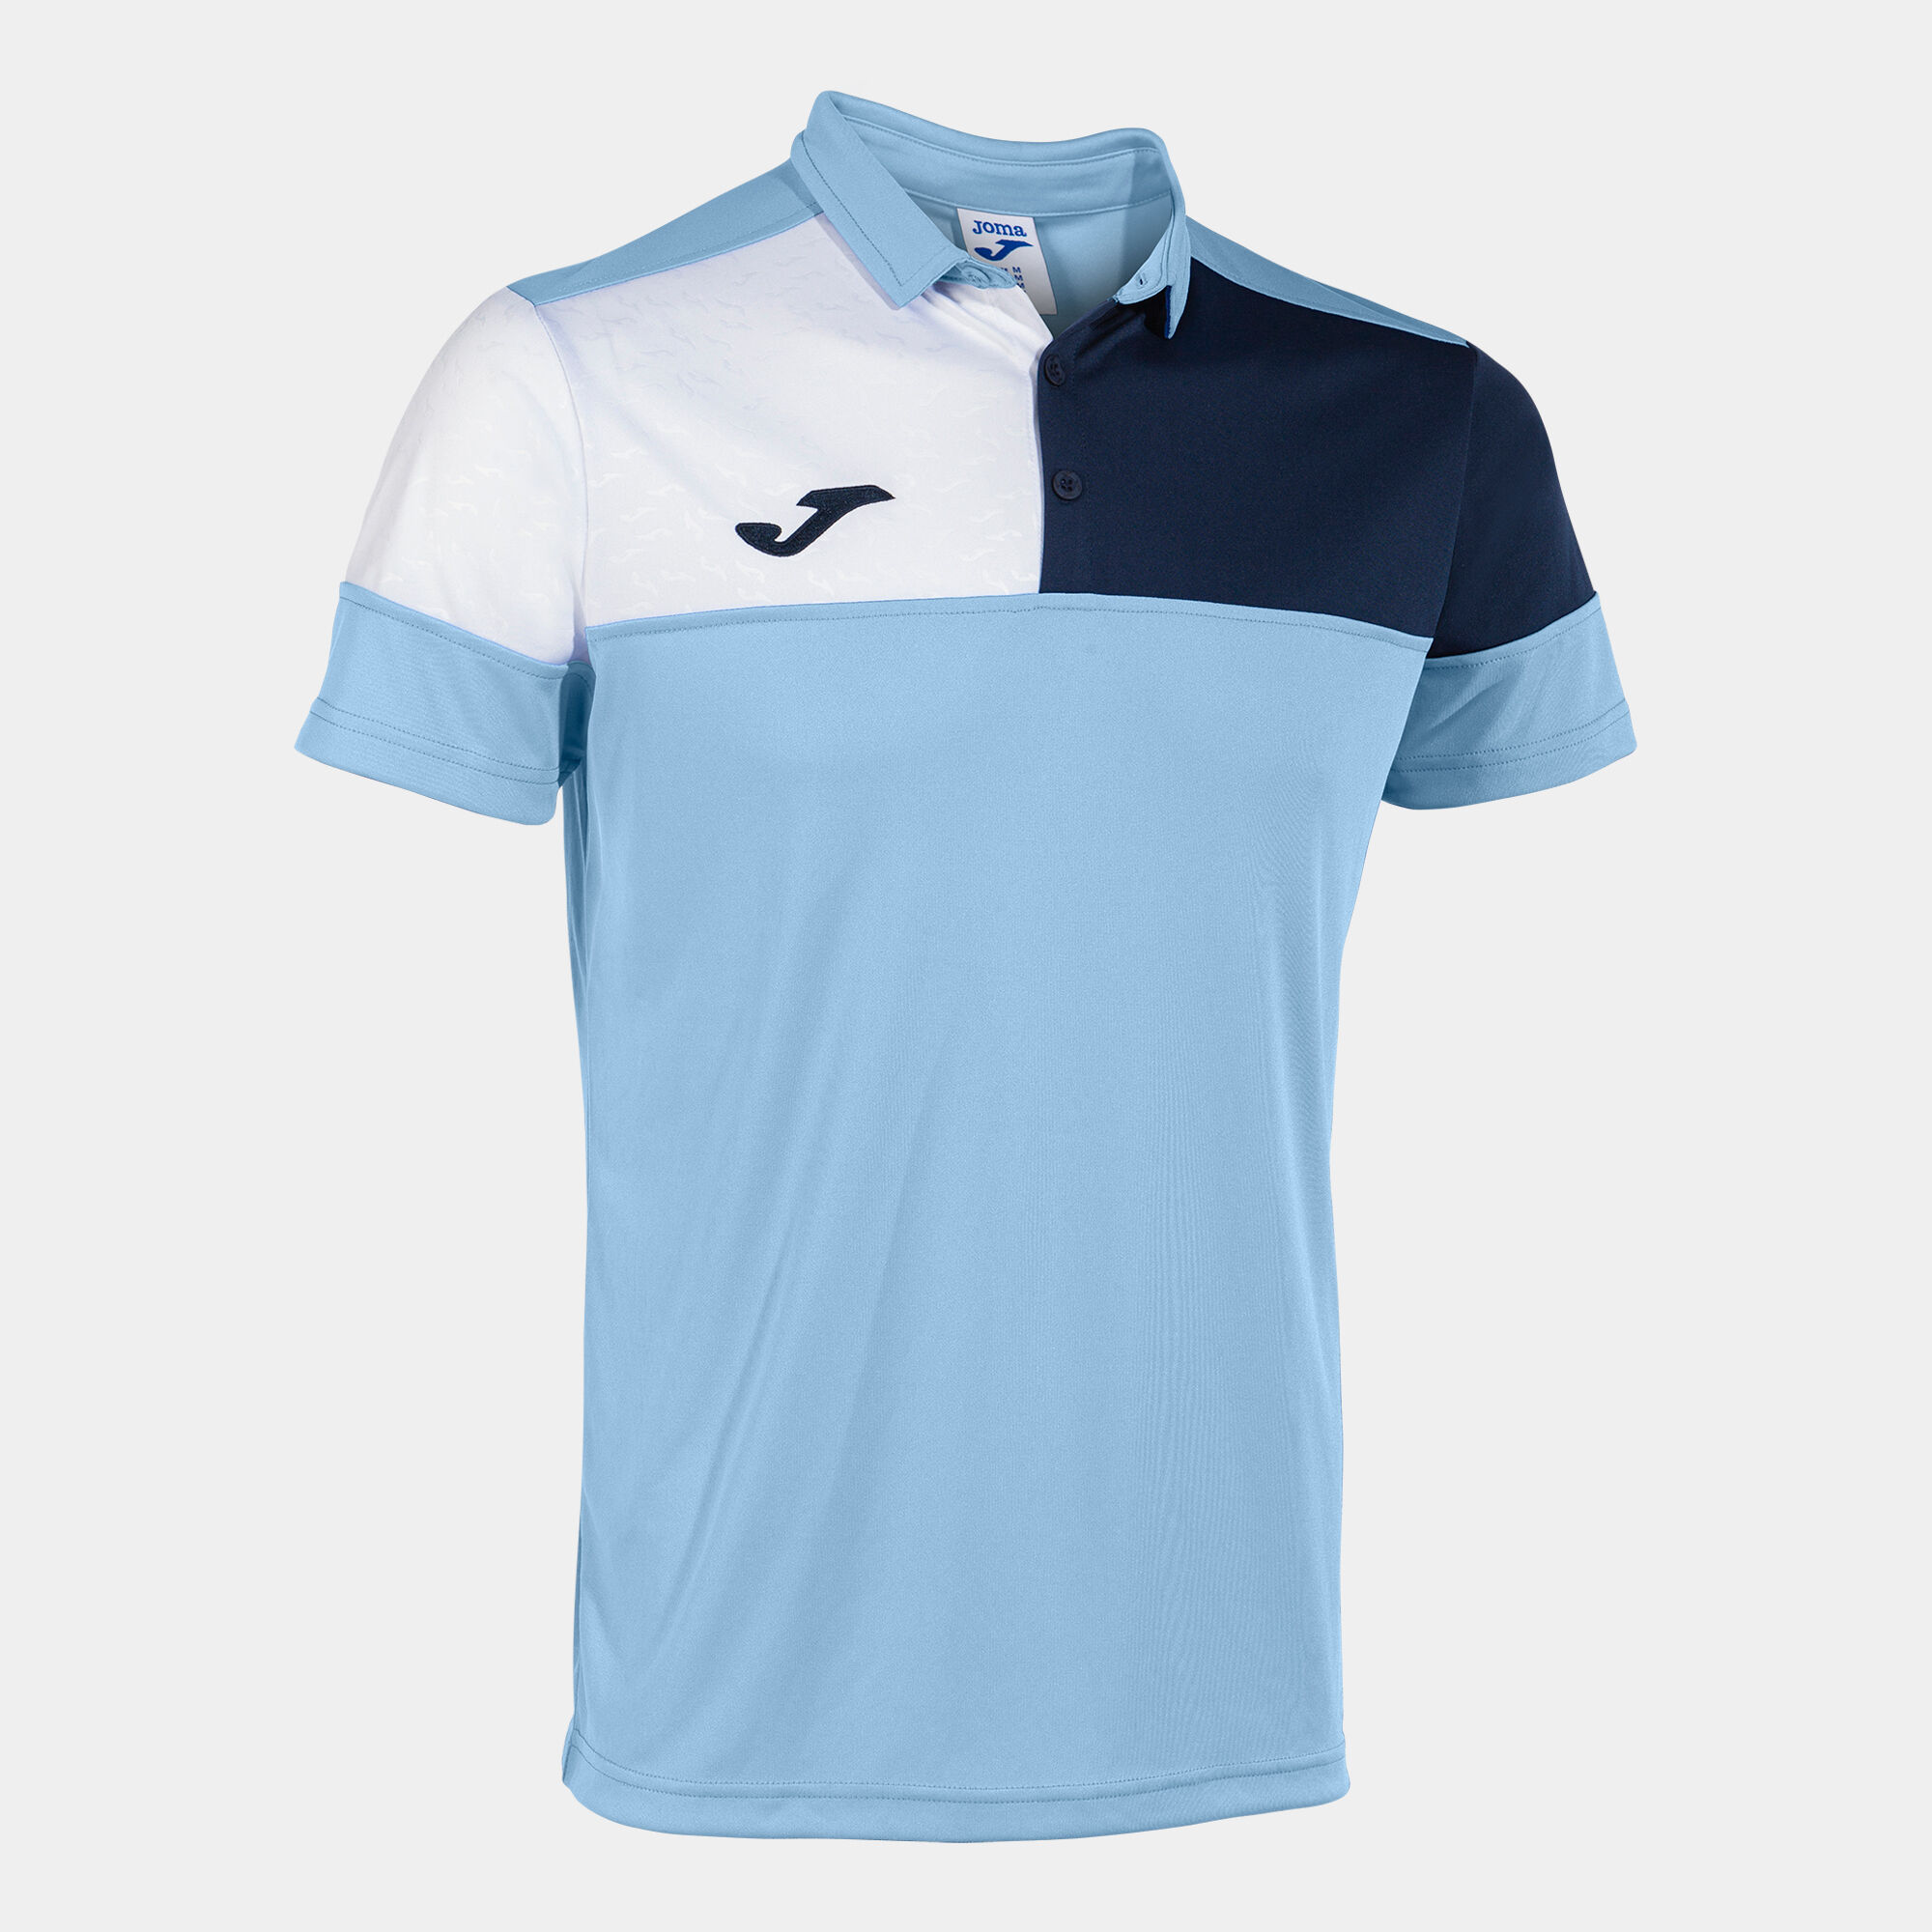 Polo shirt short-sleeve man Crew V sky blue navy blue